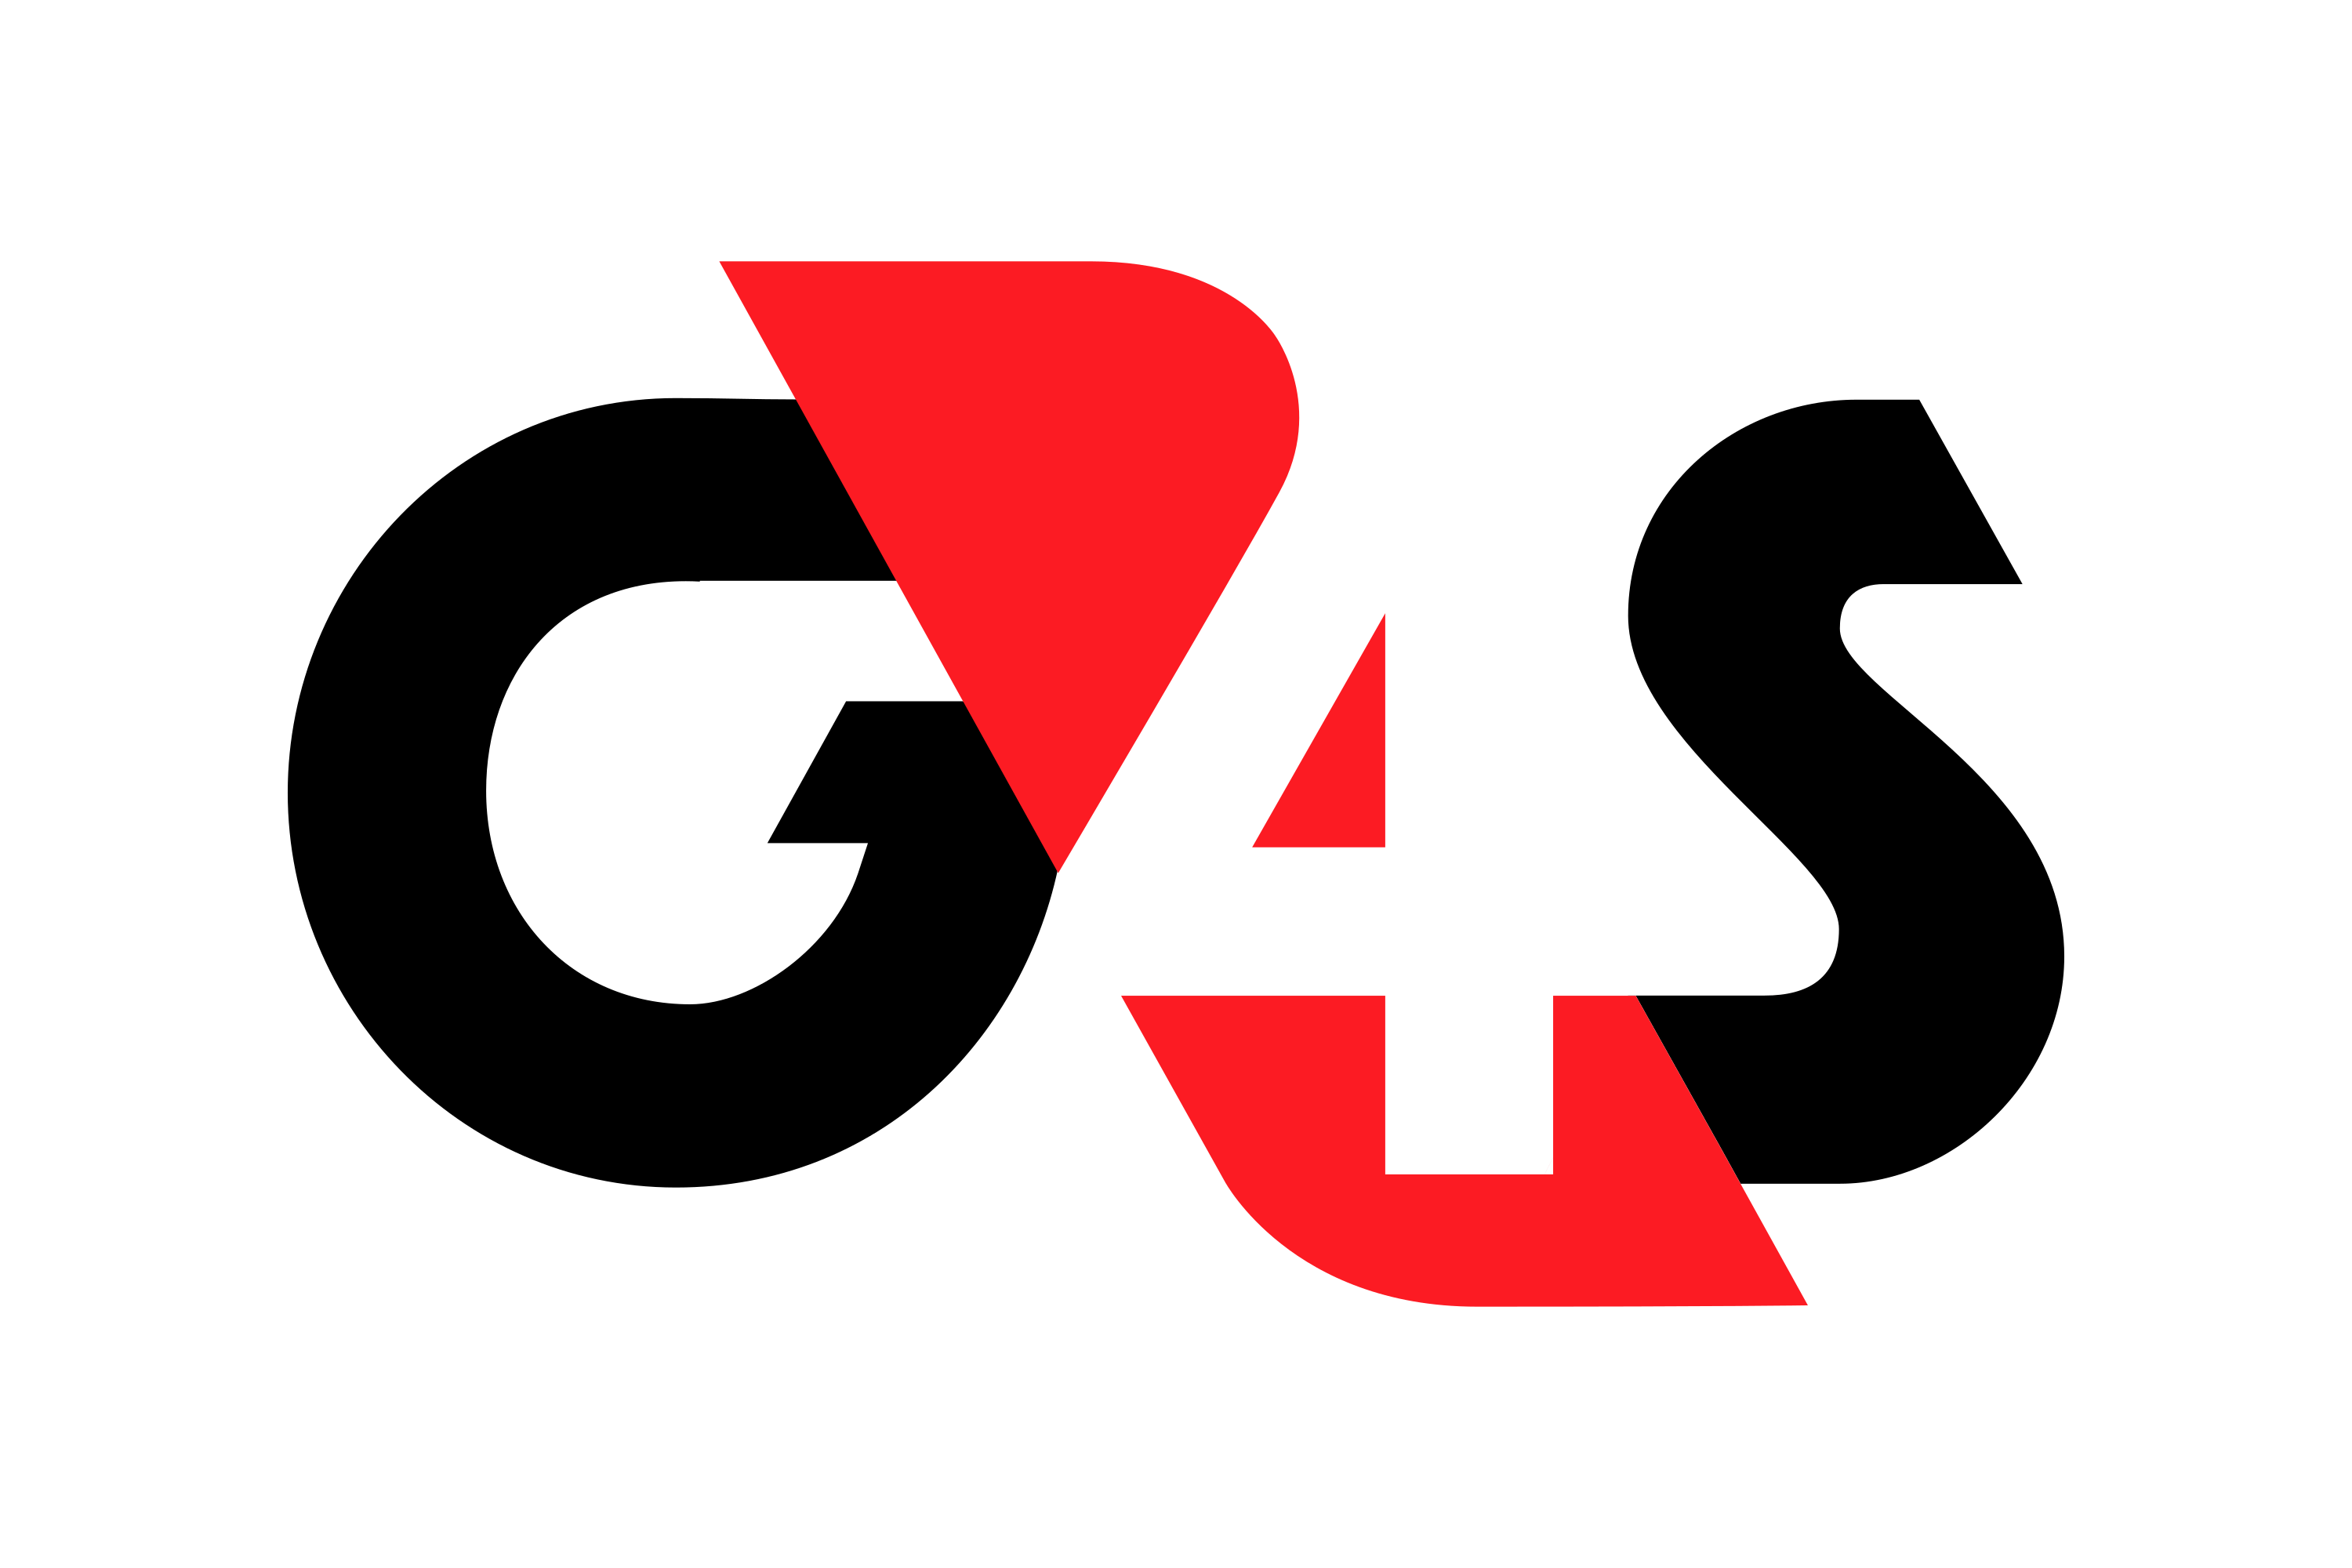 Download G4S (Group 4 Securicor) Logo in SVG Vector or PNG File Format